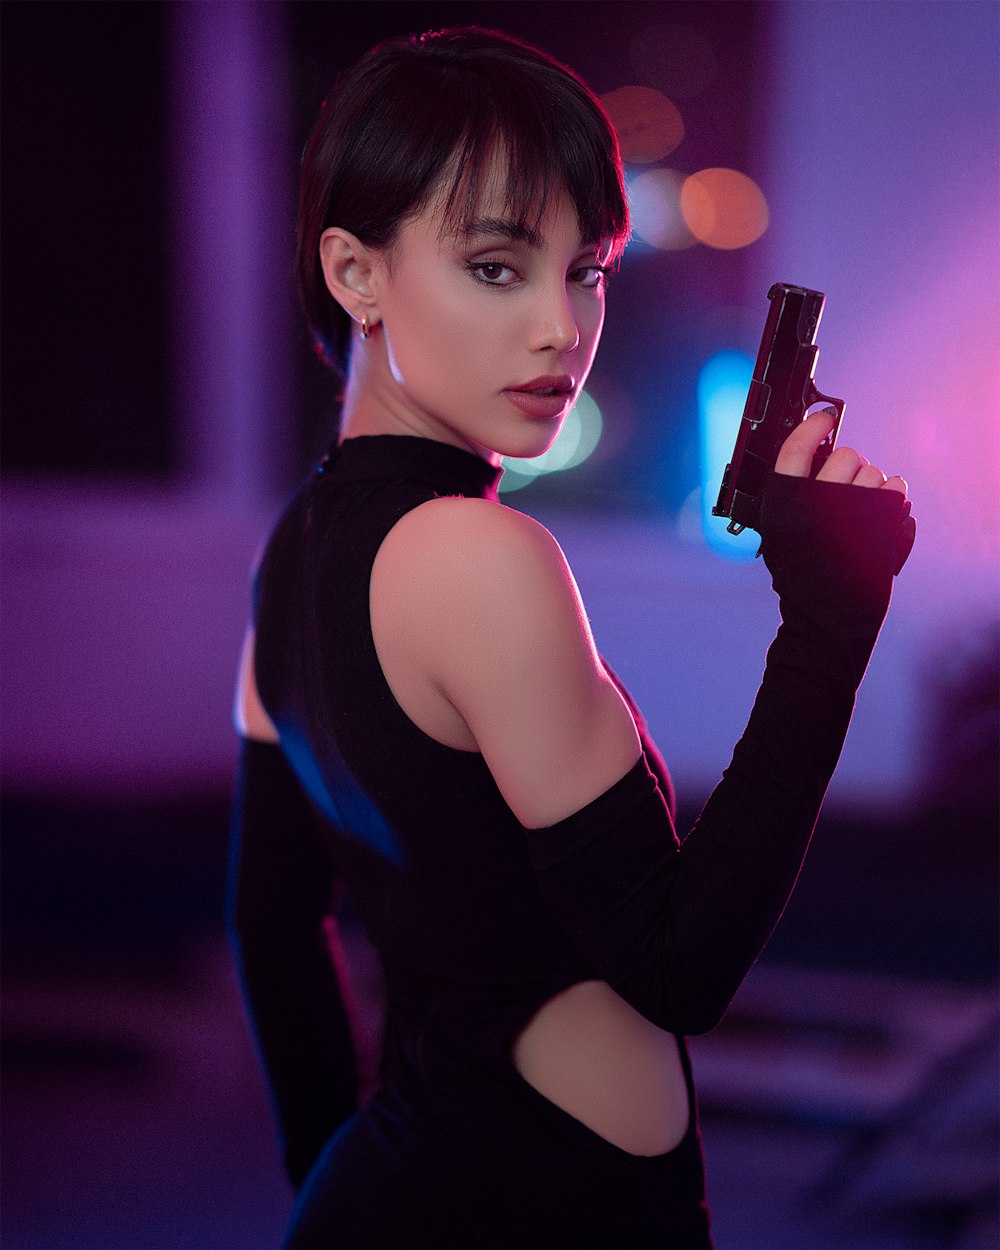 a woman in a black dress holding a gun